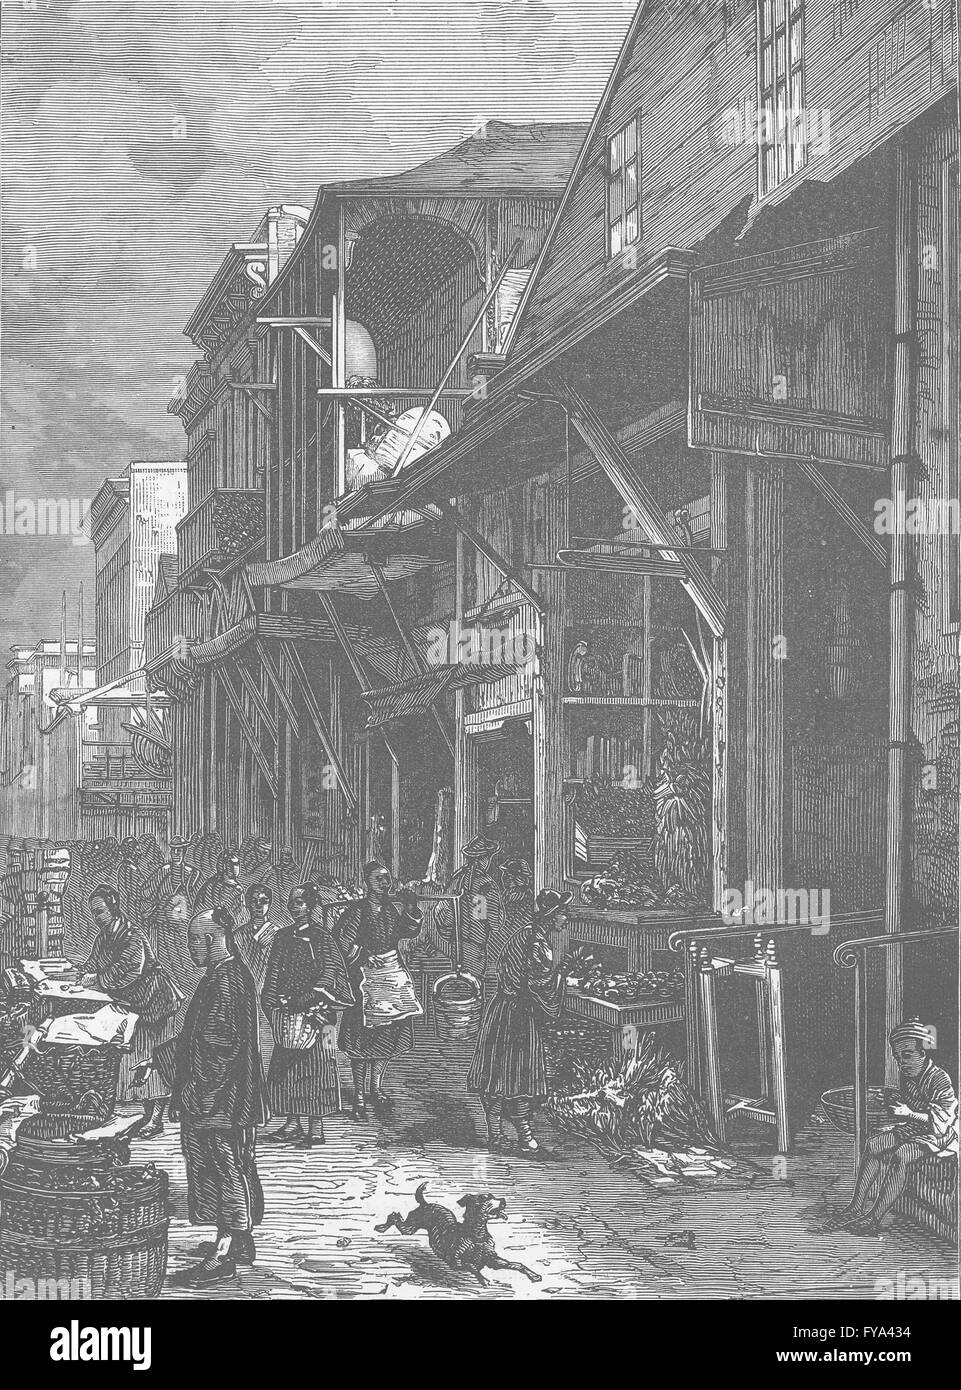 CHINA: Market street, China Town, San Francisco, antique print 1892 Stock Photo